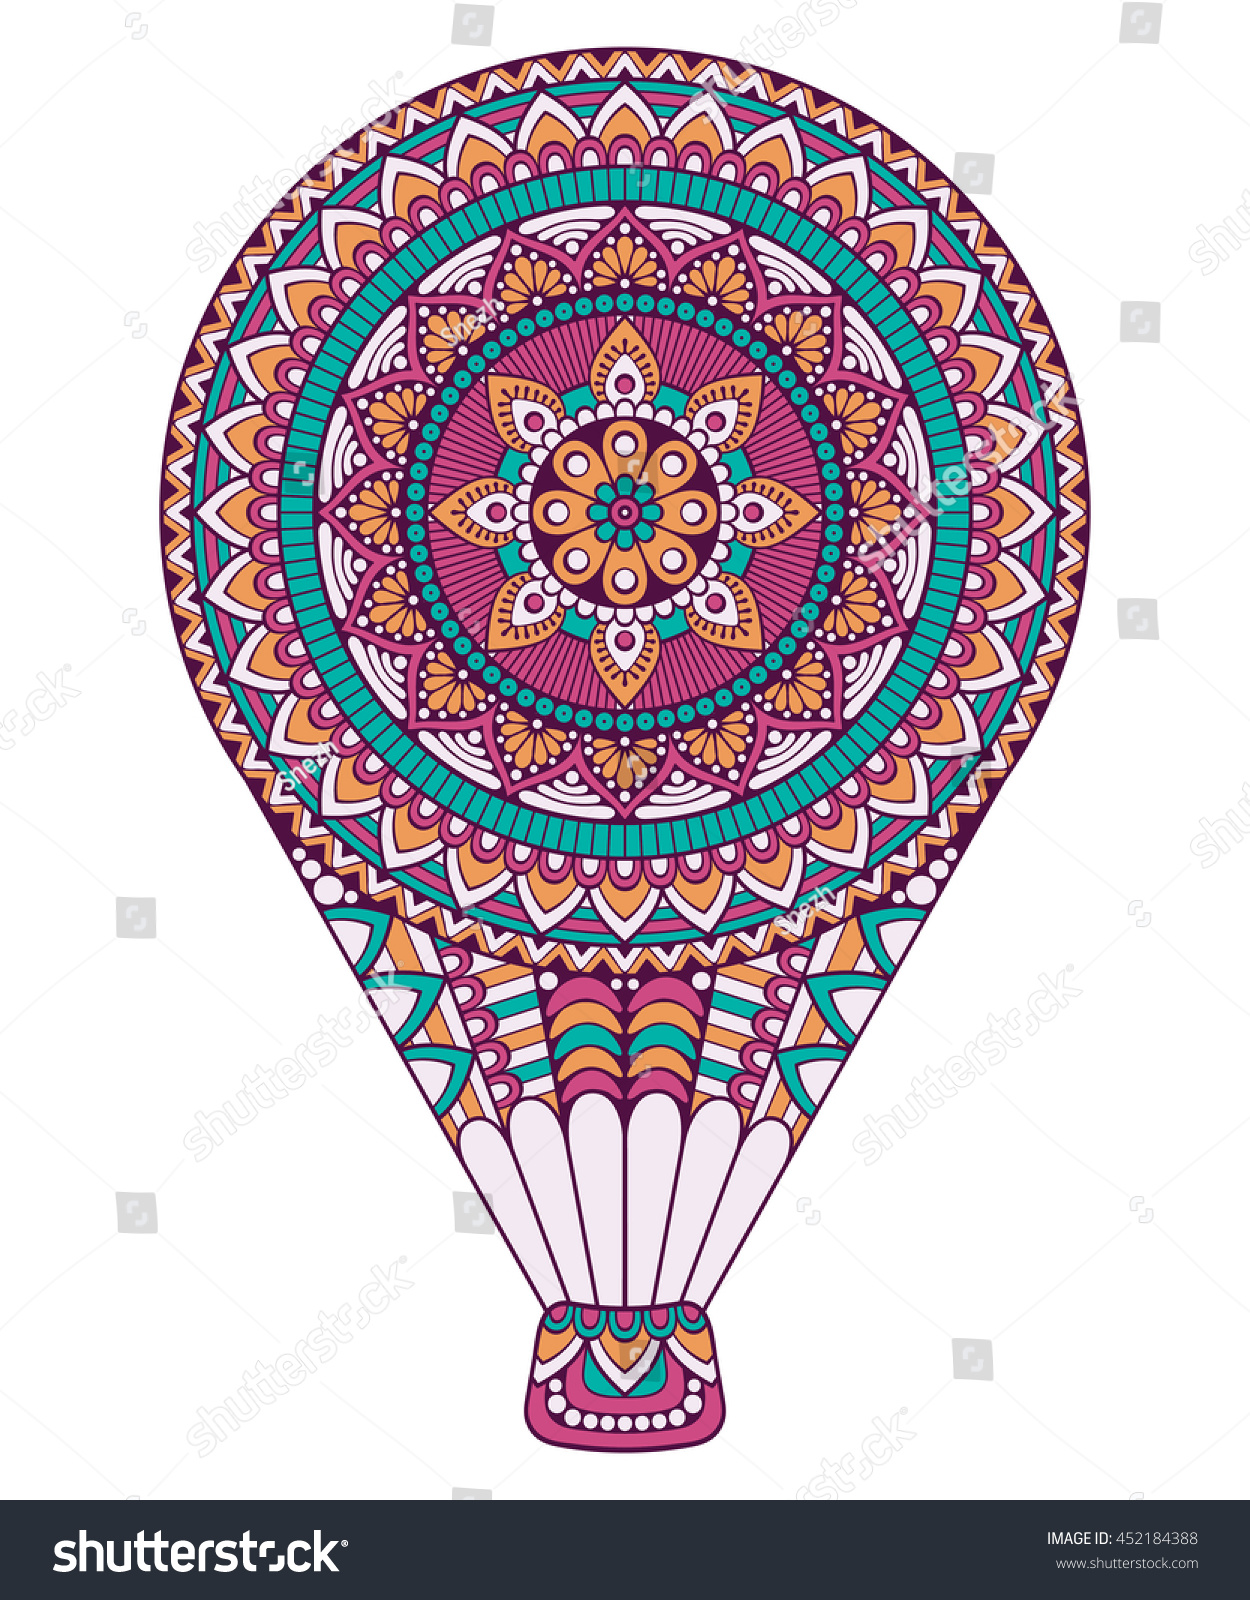 balloon with Mandala. Vintage decorative elements. Oriental pattern, vector illustration. Islam, Arabic, Indian, turkish, pakistan, chinese, ottoman motifs